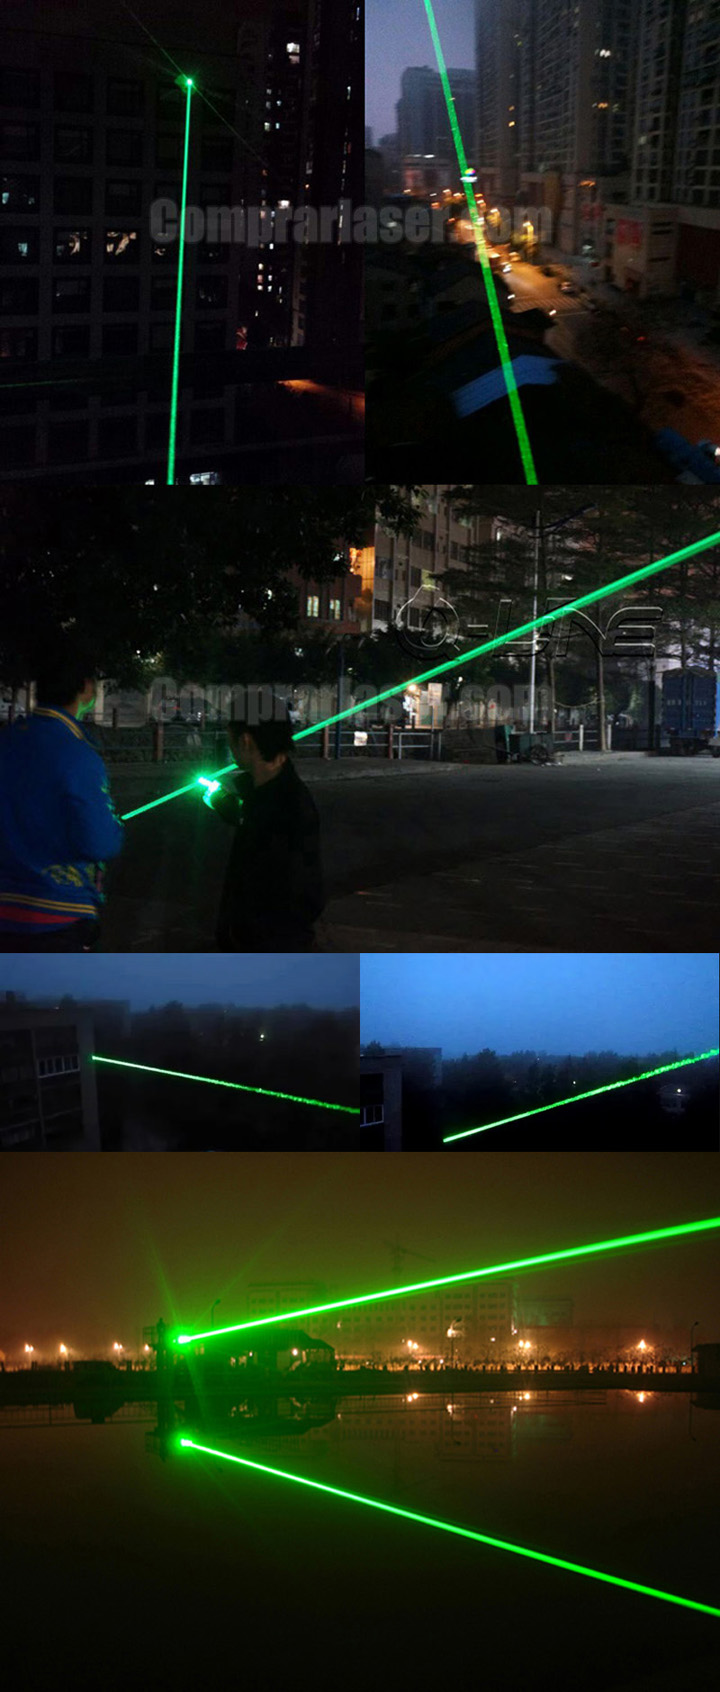 Puntatore laser verde più potente